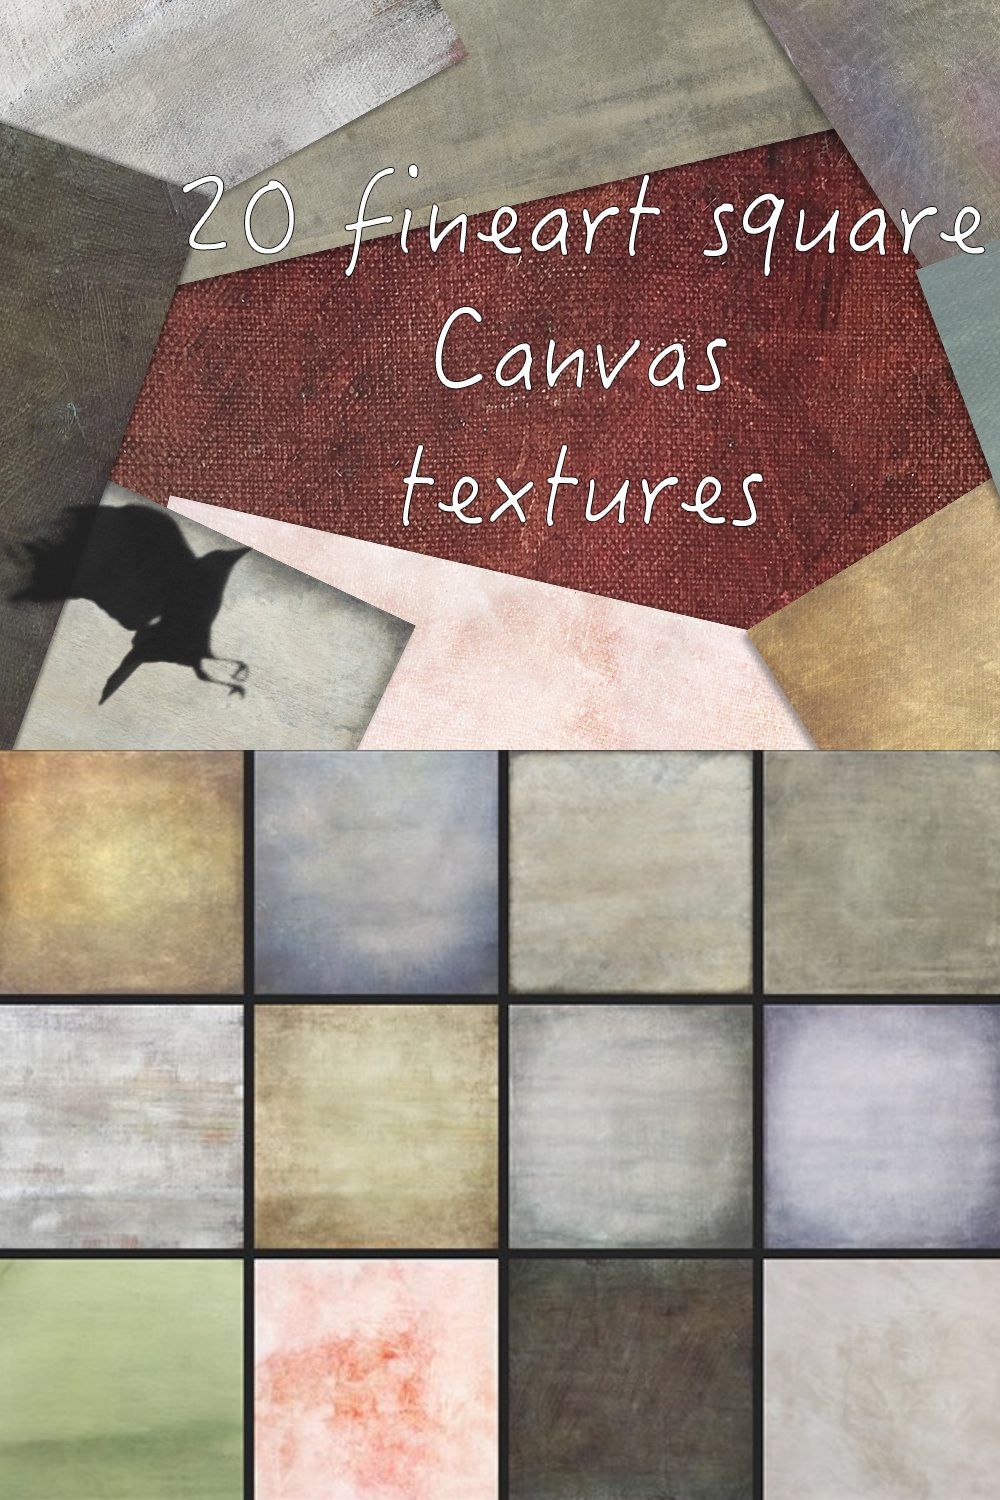 20 fineart Canvas Textures pinterest preview image.